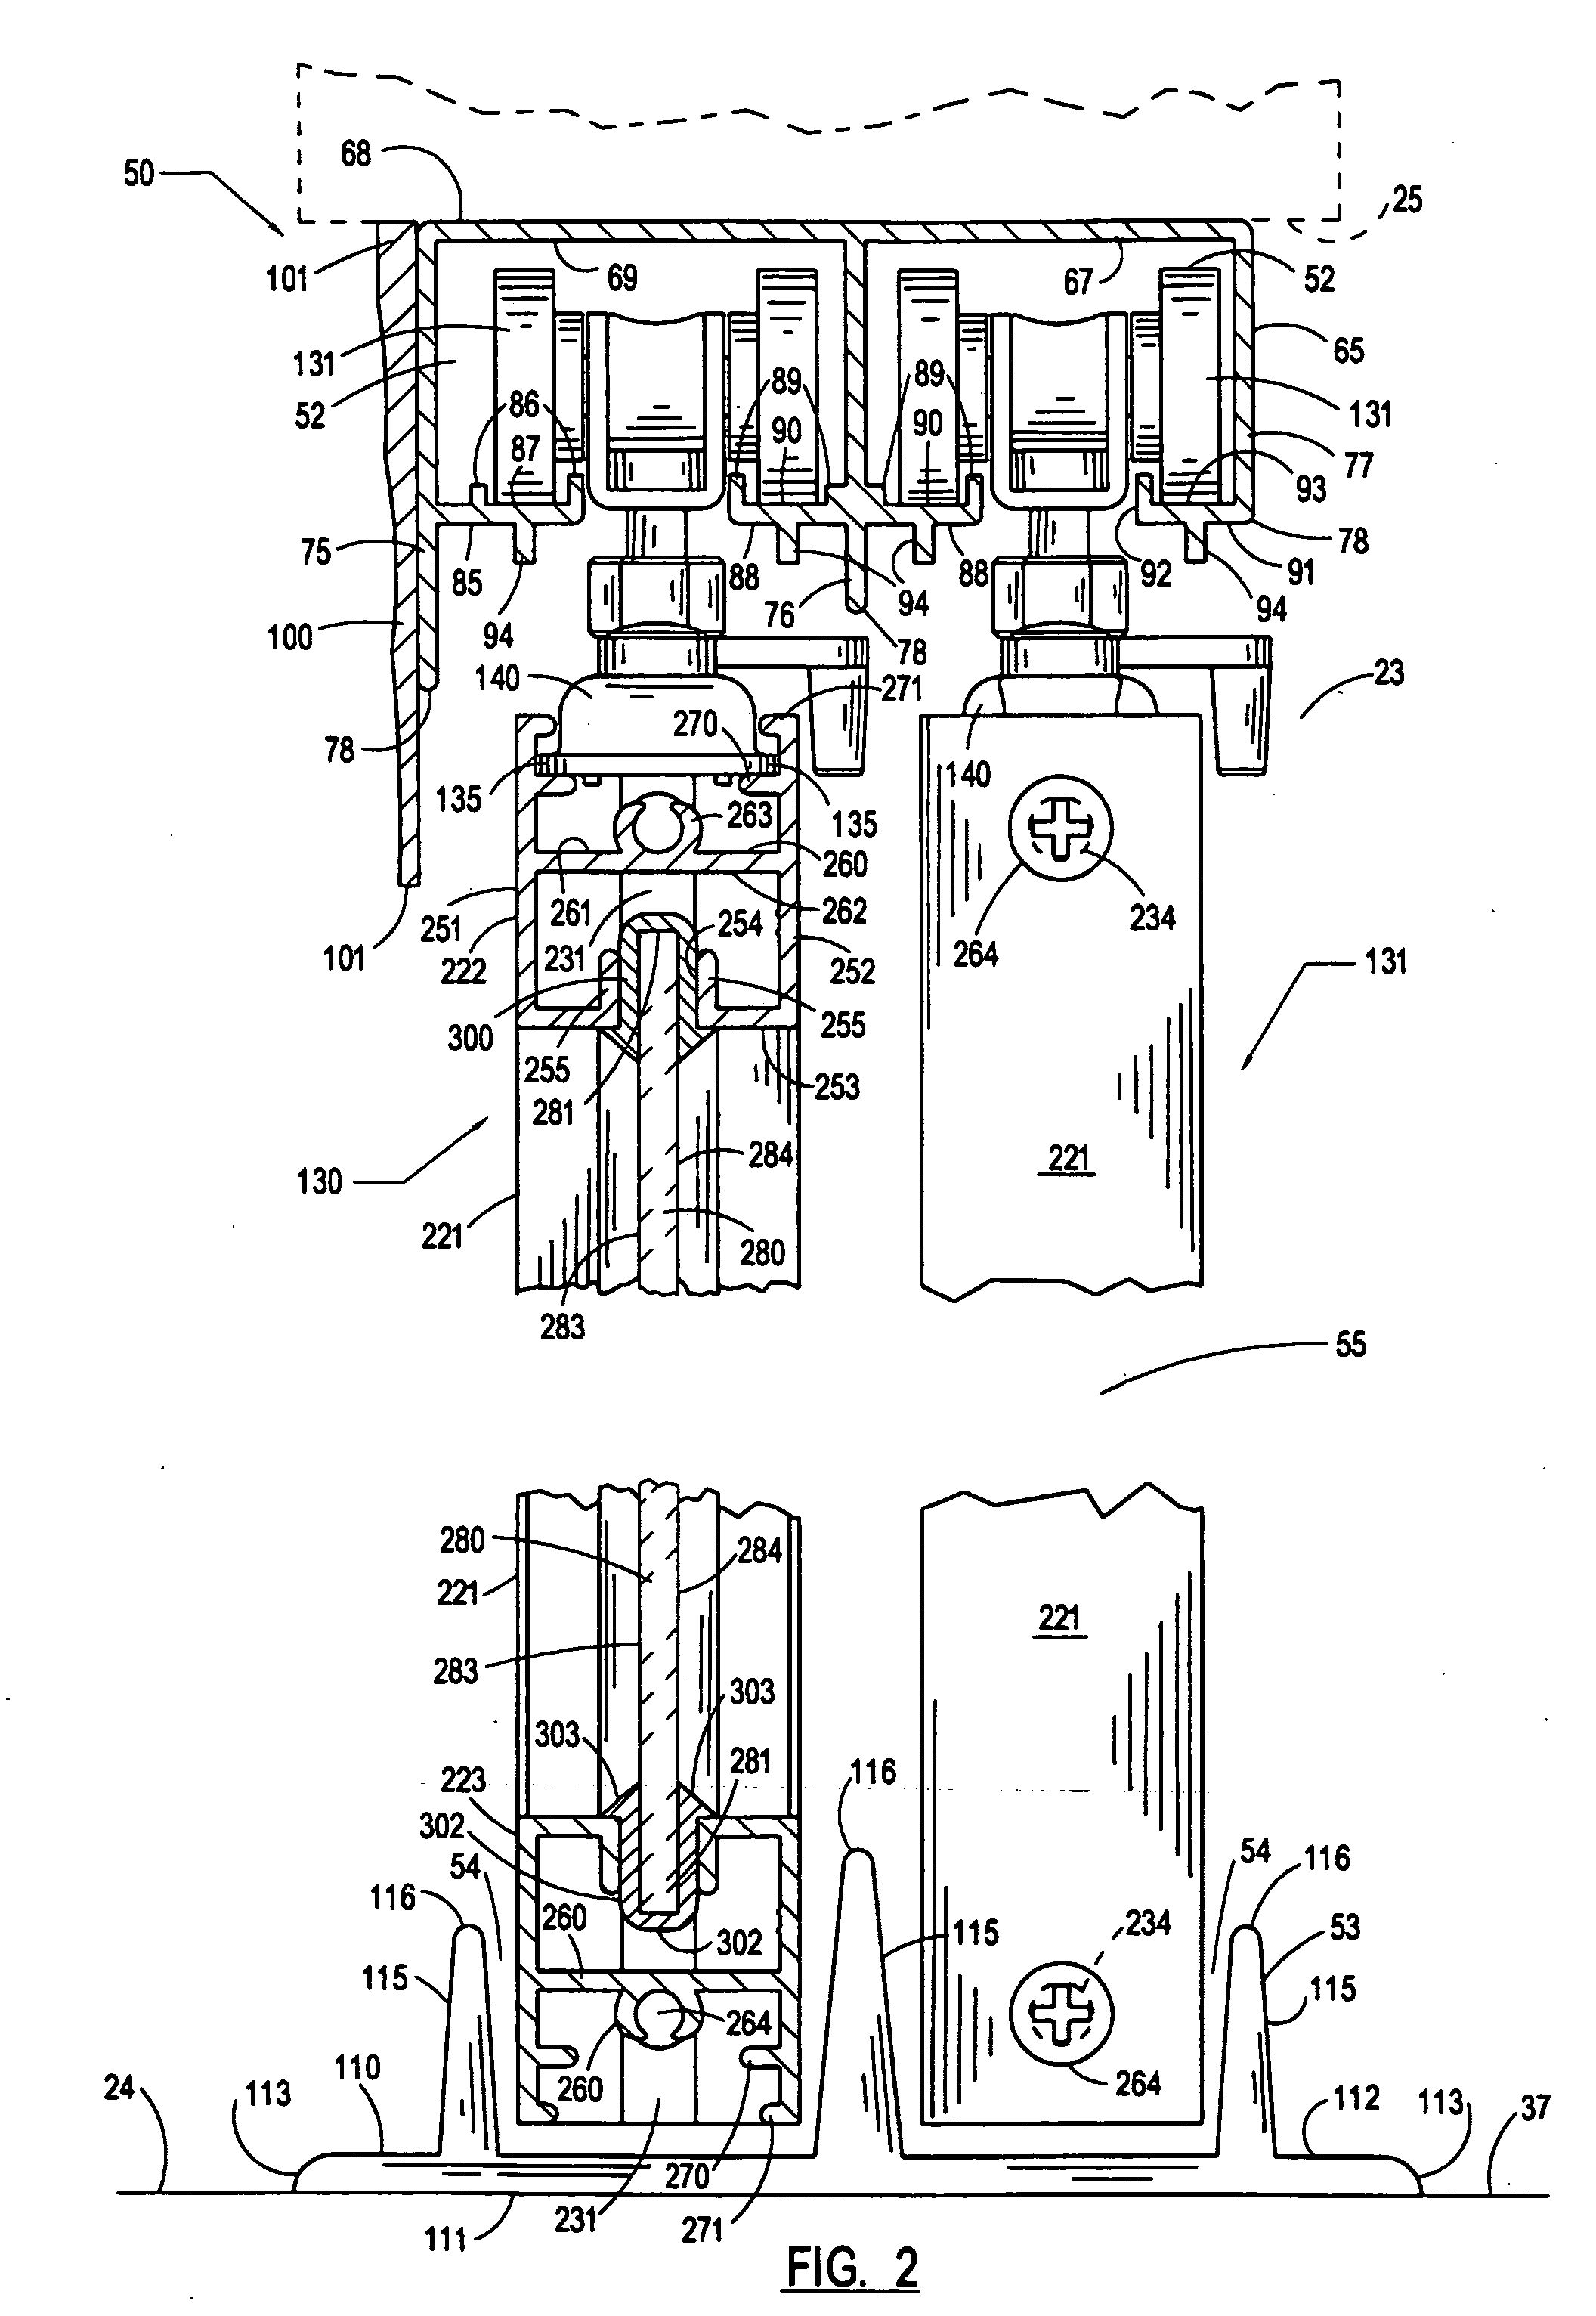 Construction apparatus